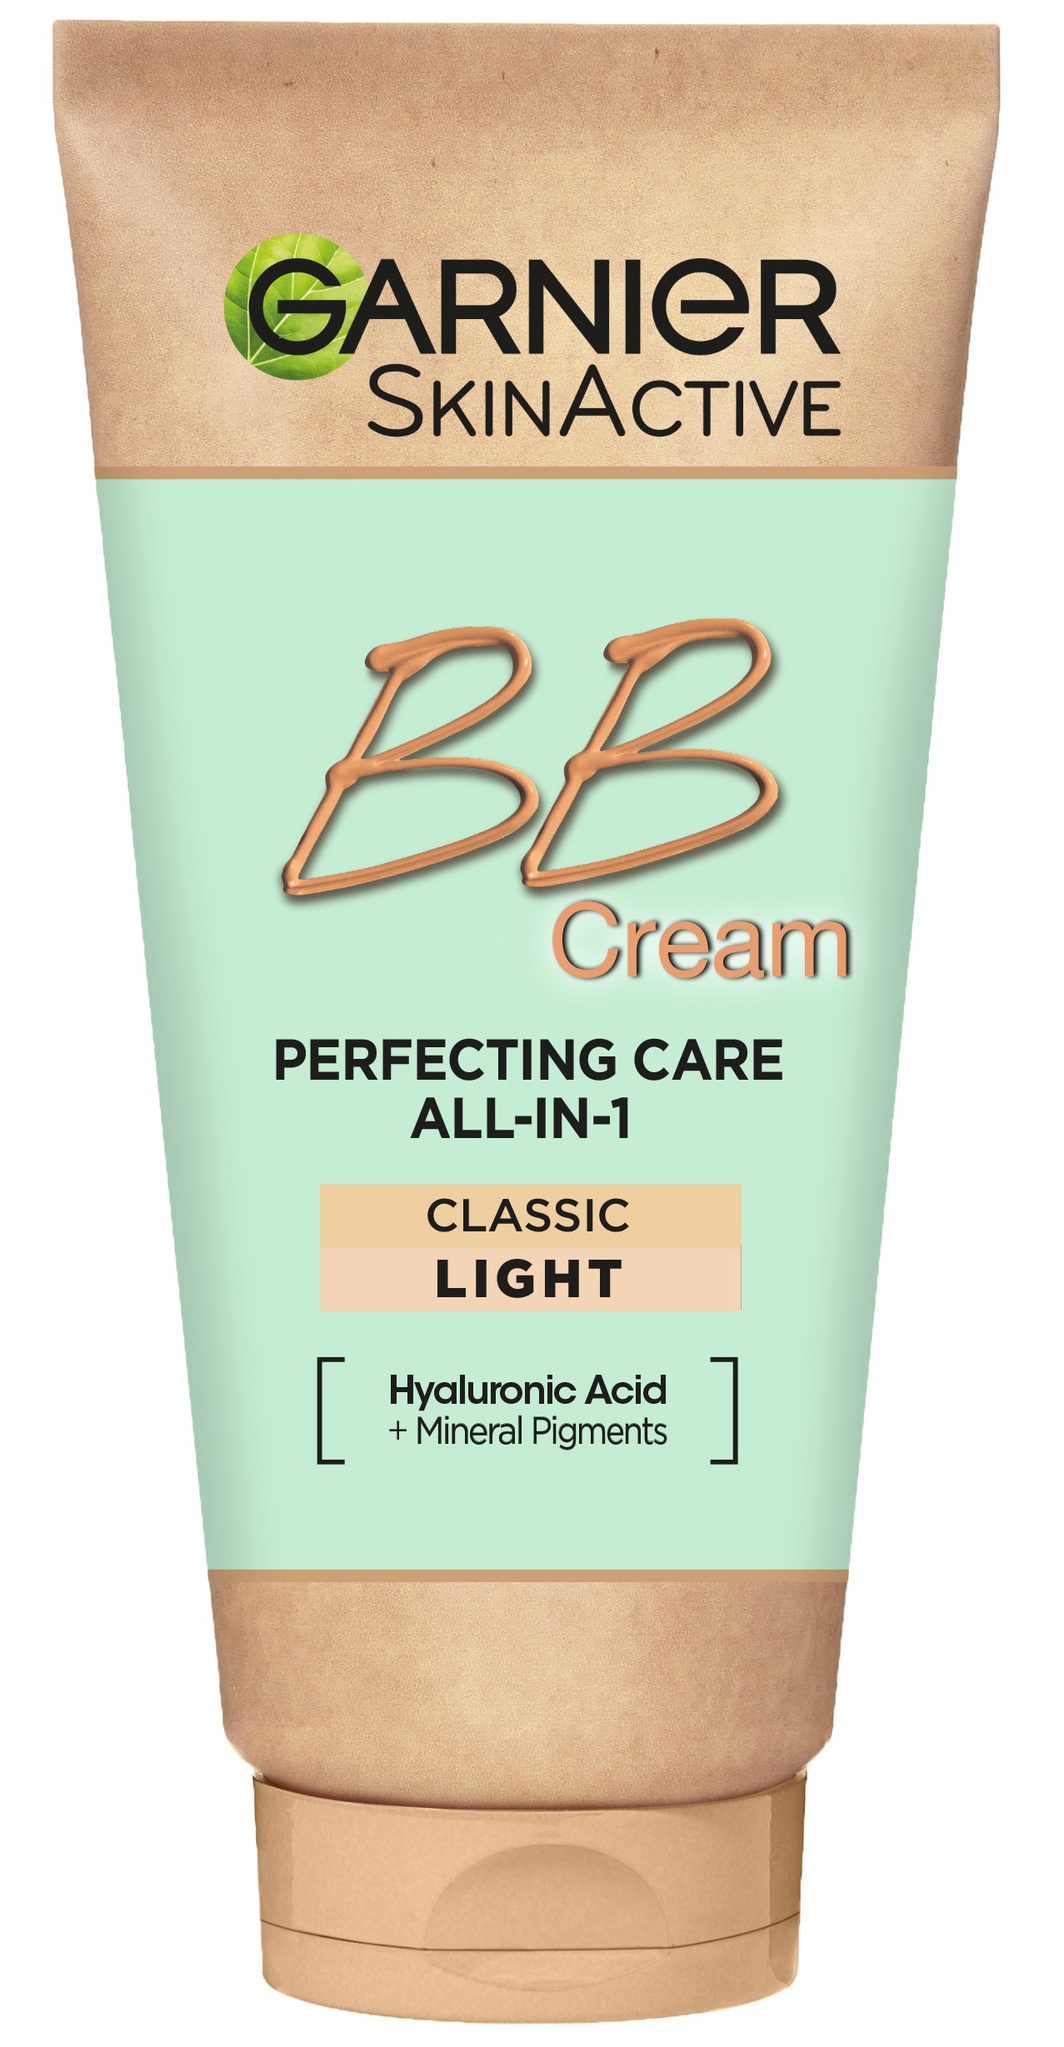 Garnier Skinactive BB Cream Classic Perfecting Care All-in-1 Light